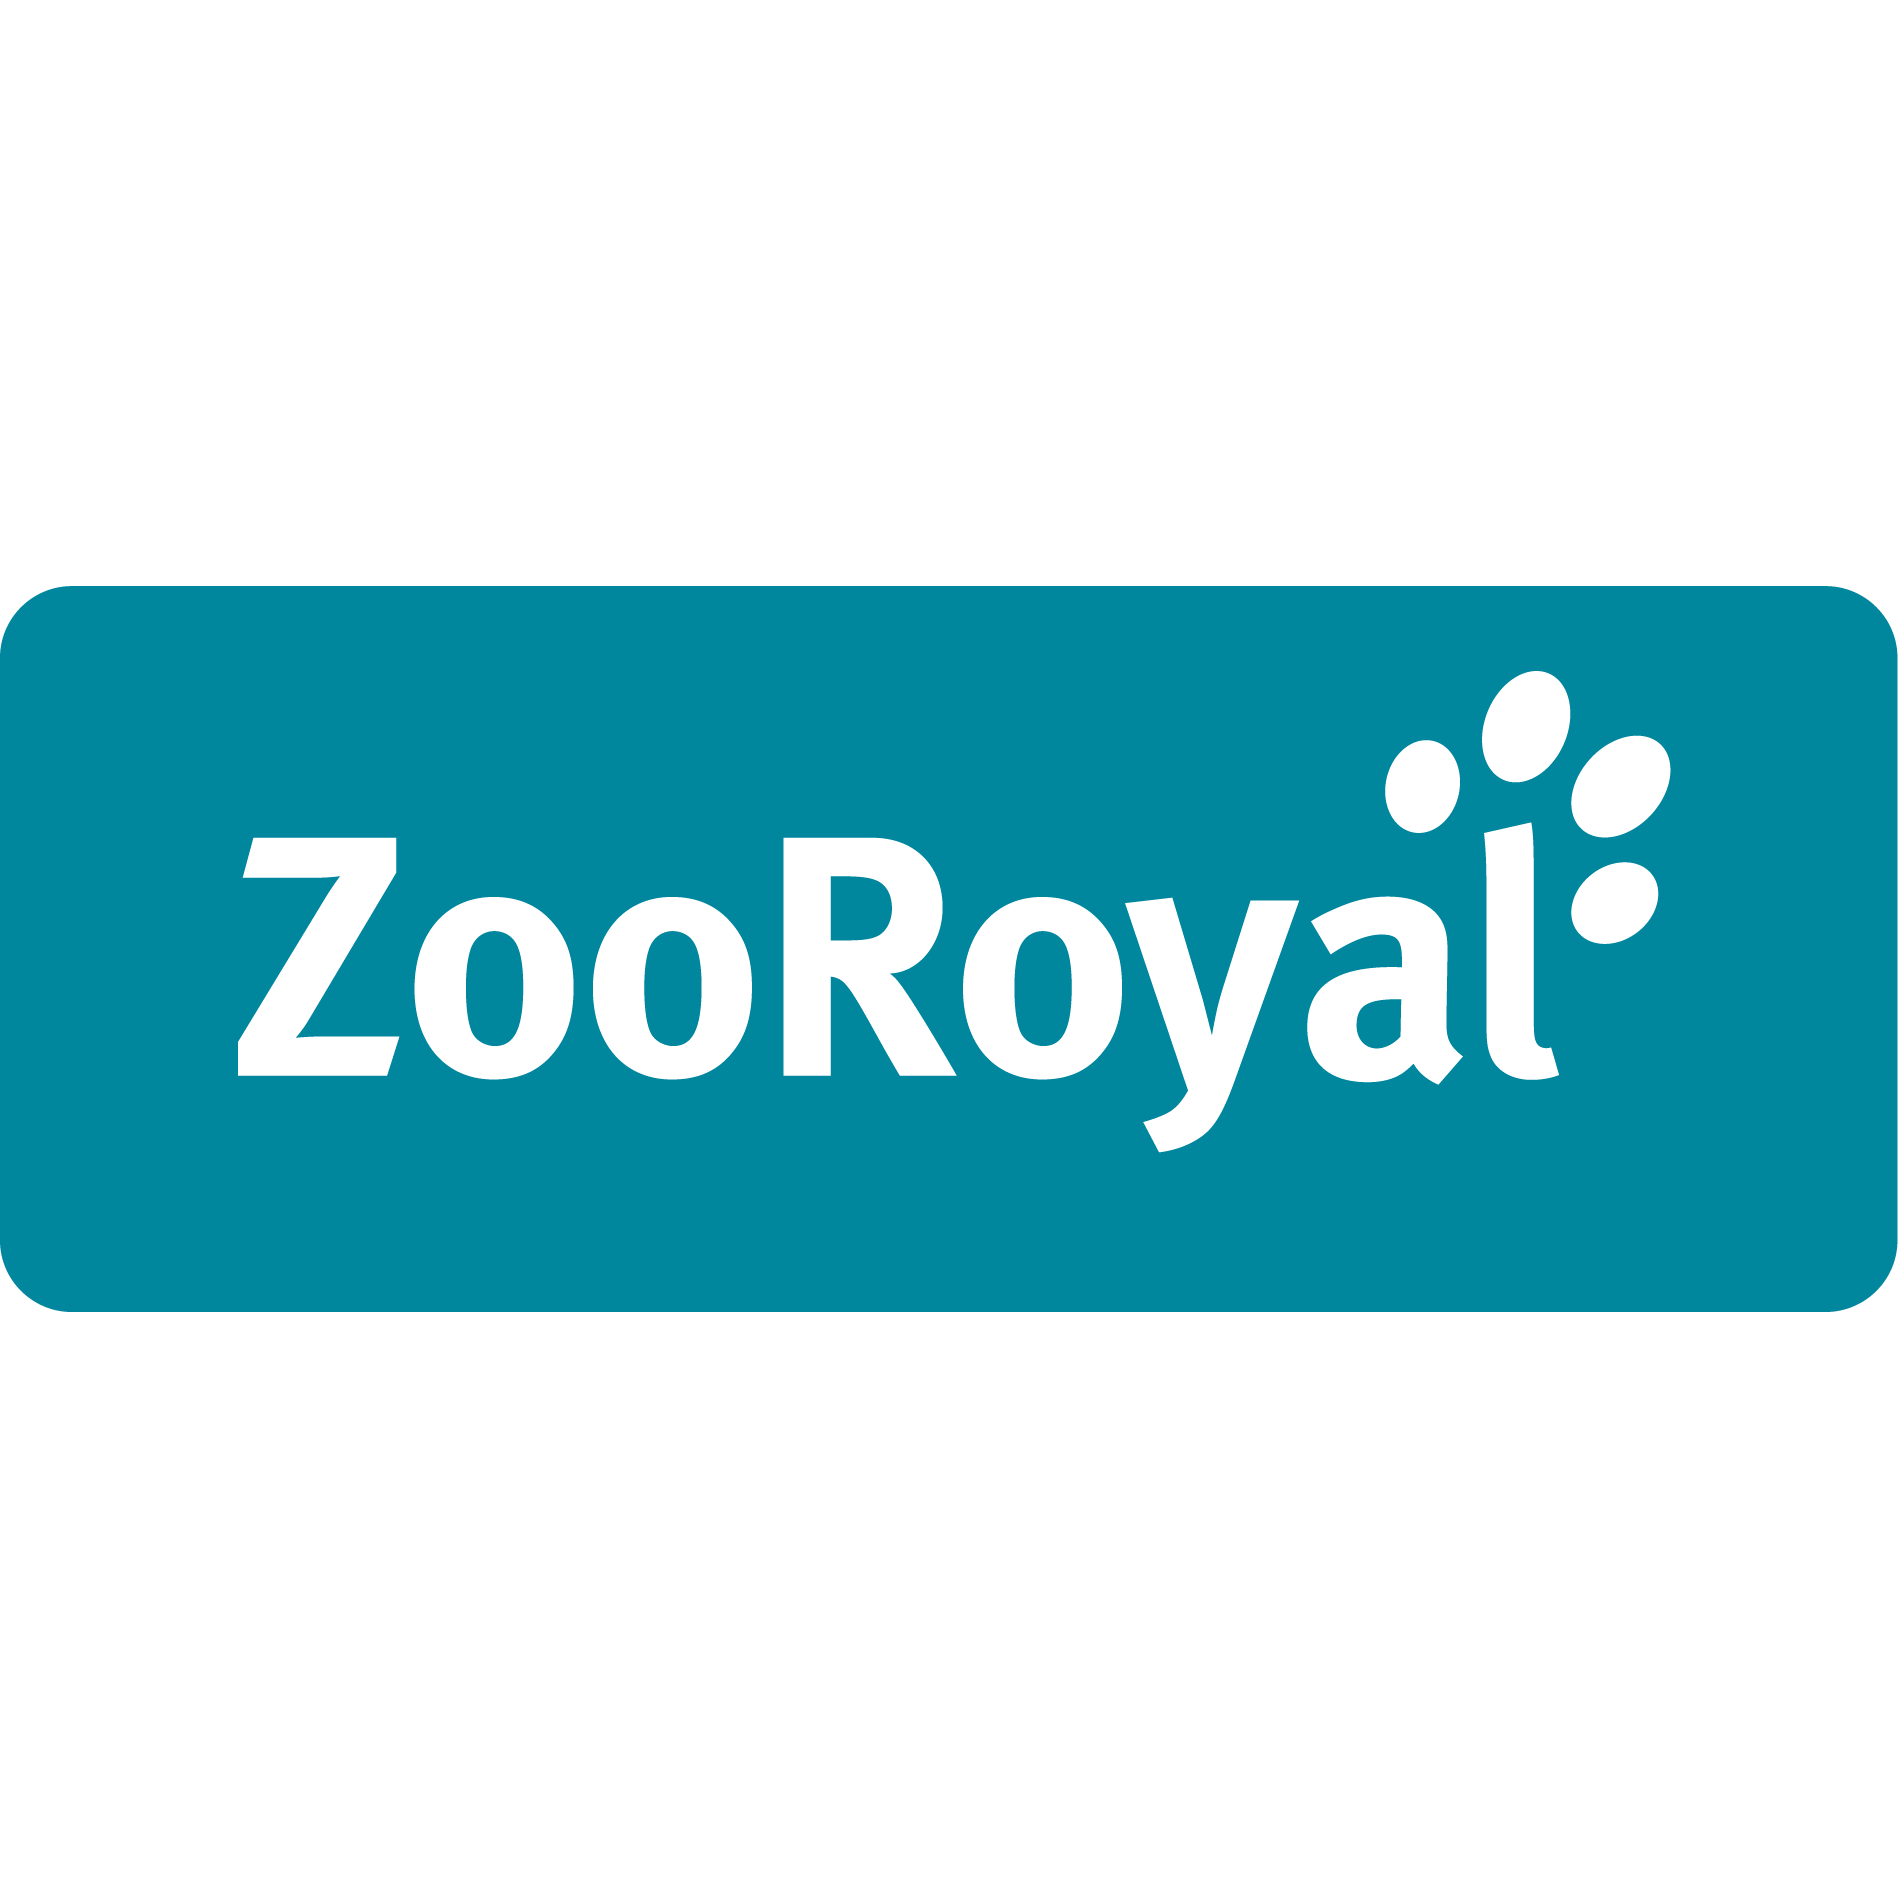 ZooRoyal in Norderstedt - Logo